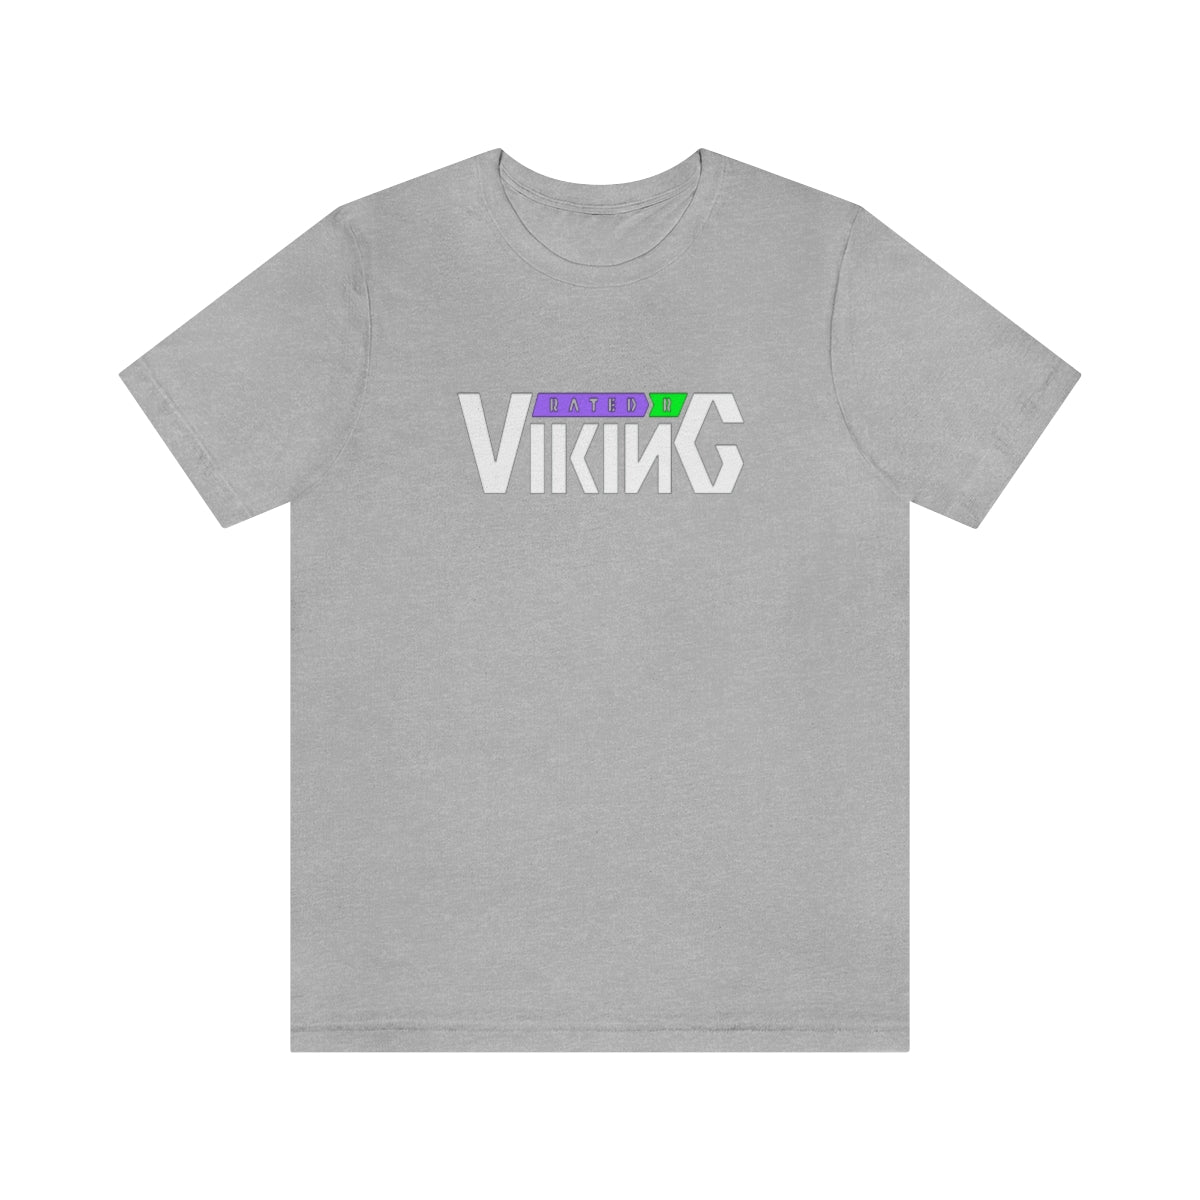 Rated R Viking Alternative Unisex T-shirt